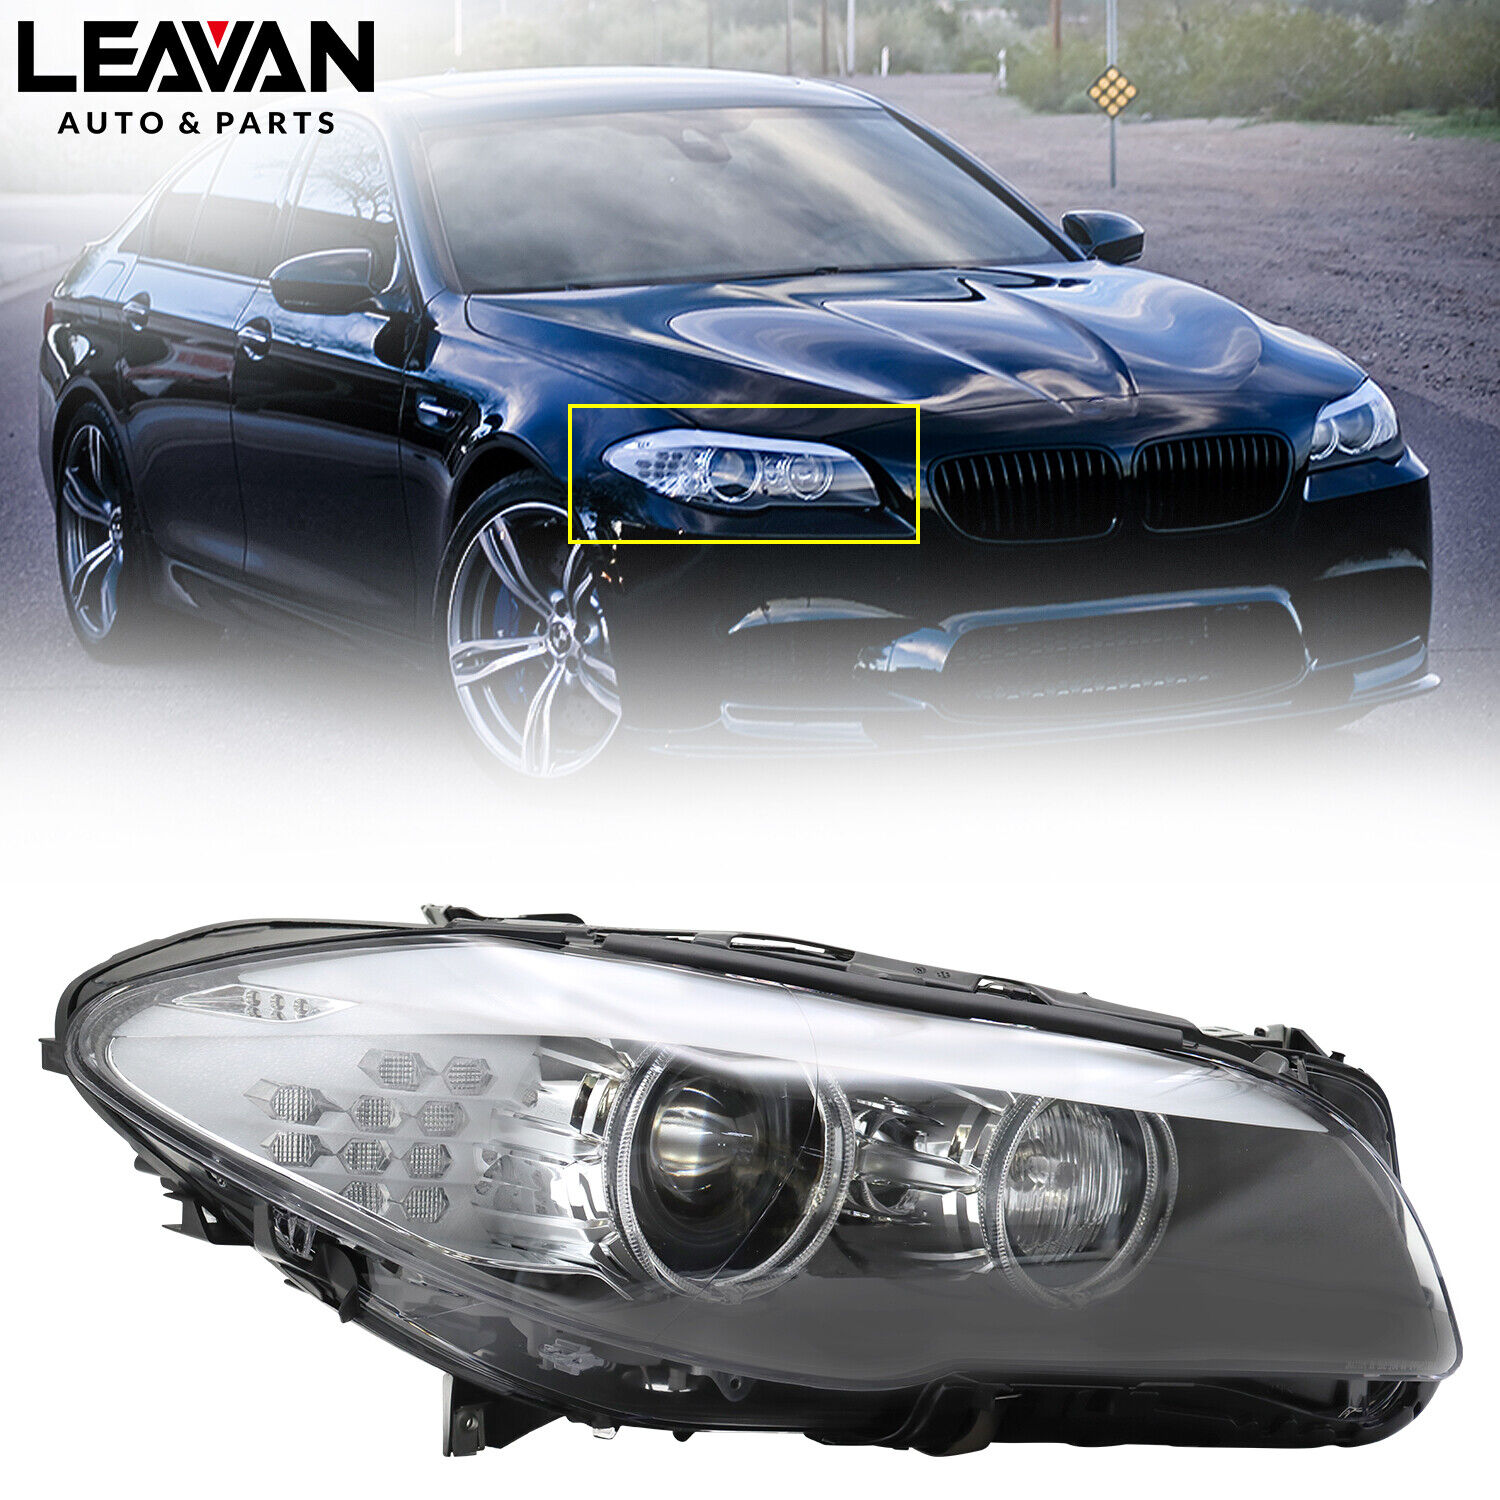 Xenon Adaptive Headlight Right AFS HID For 2009-2013 BMW 5 Series F10 528i 535i